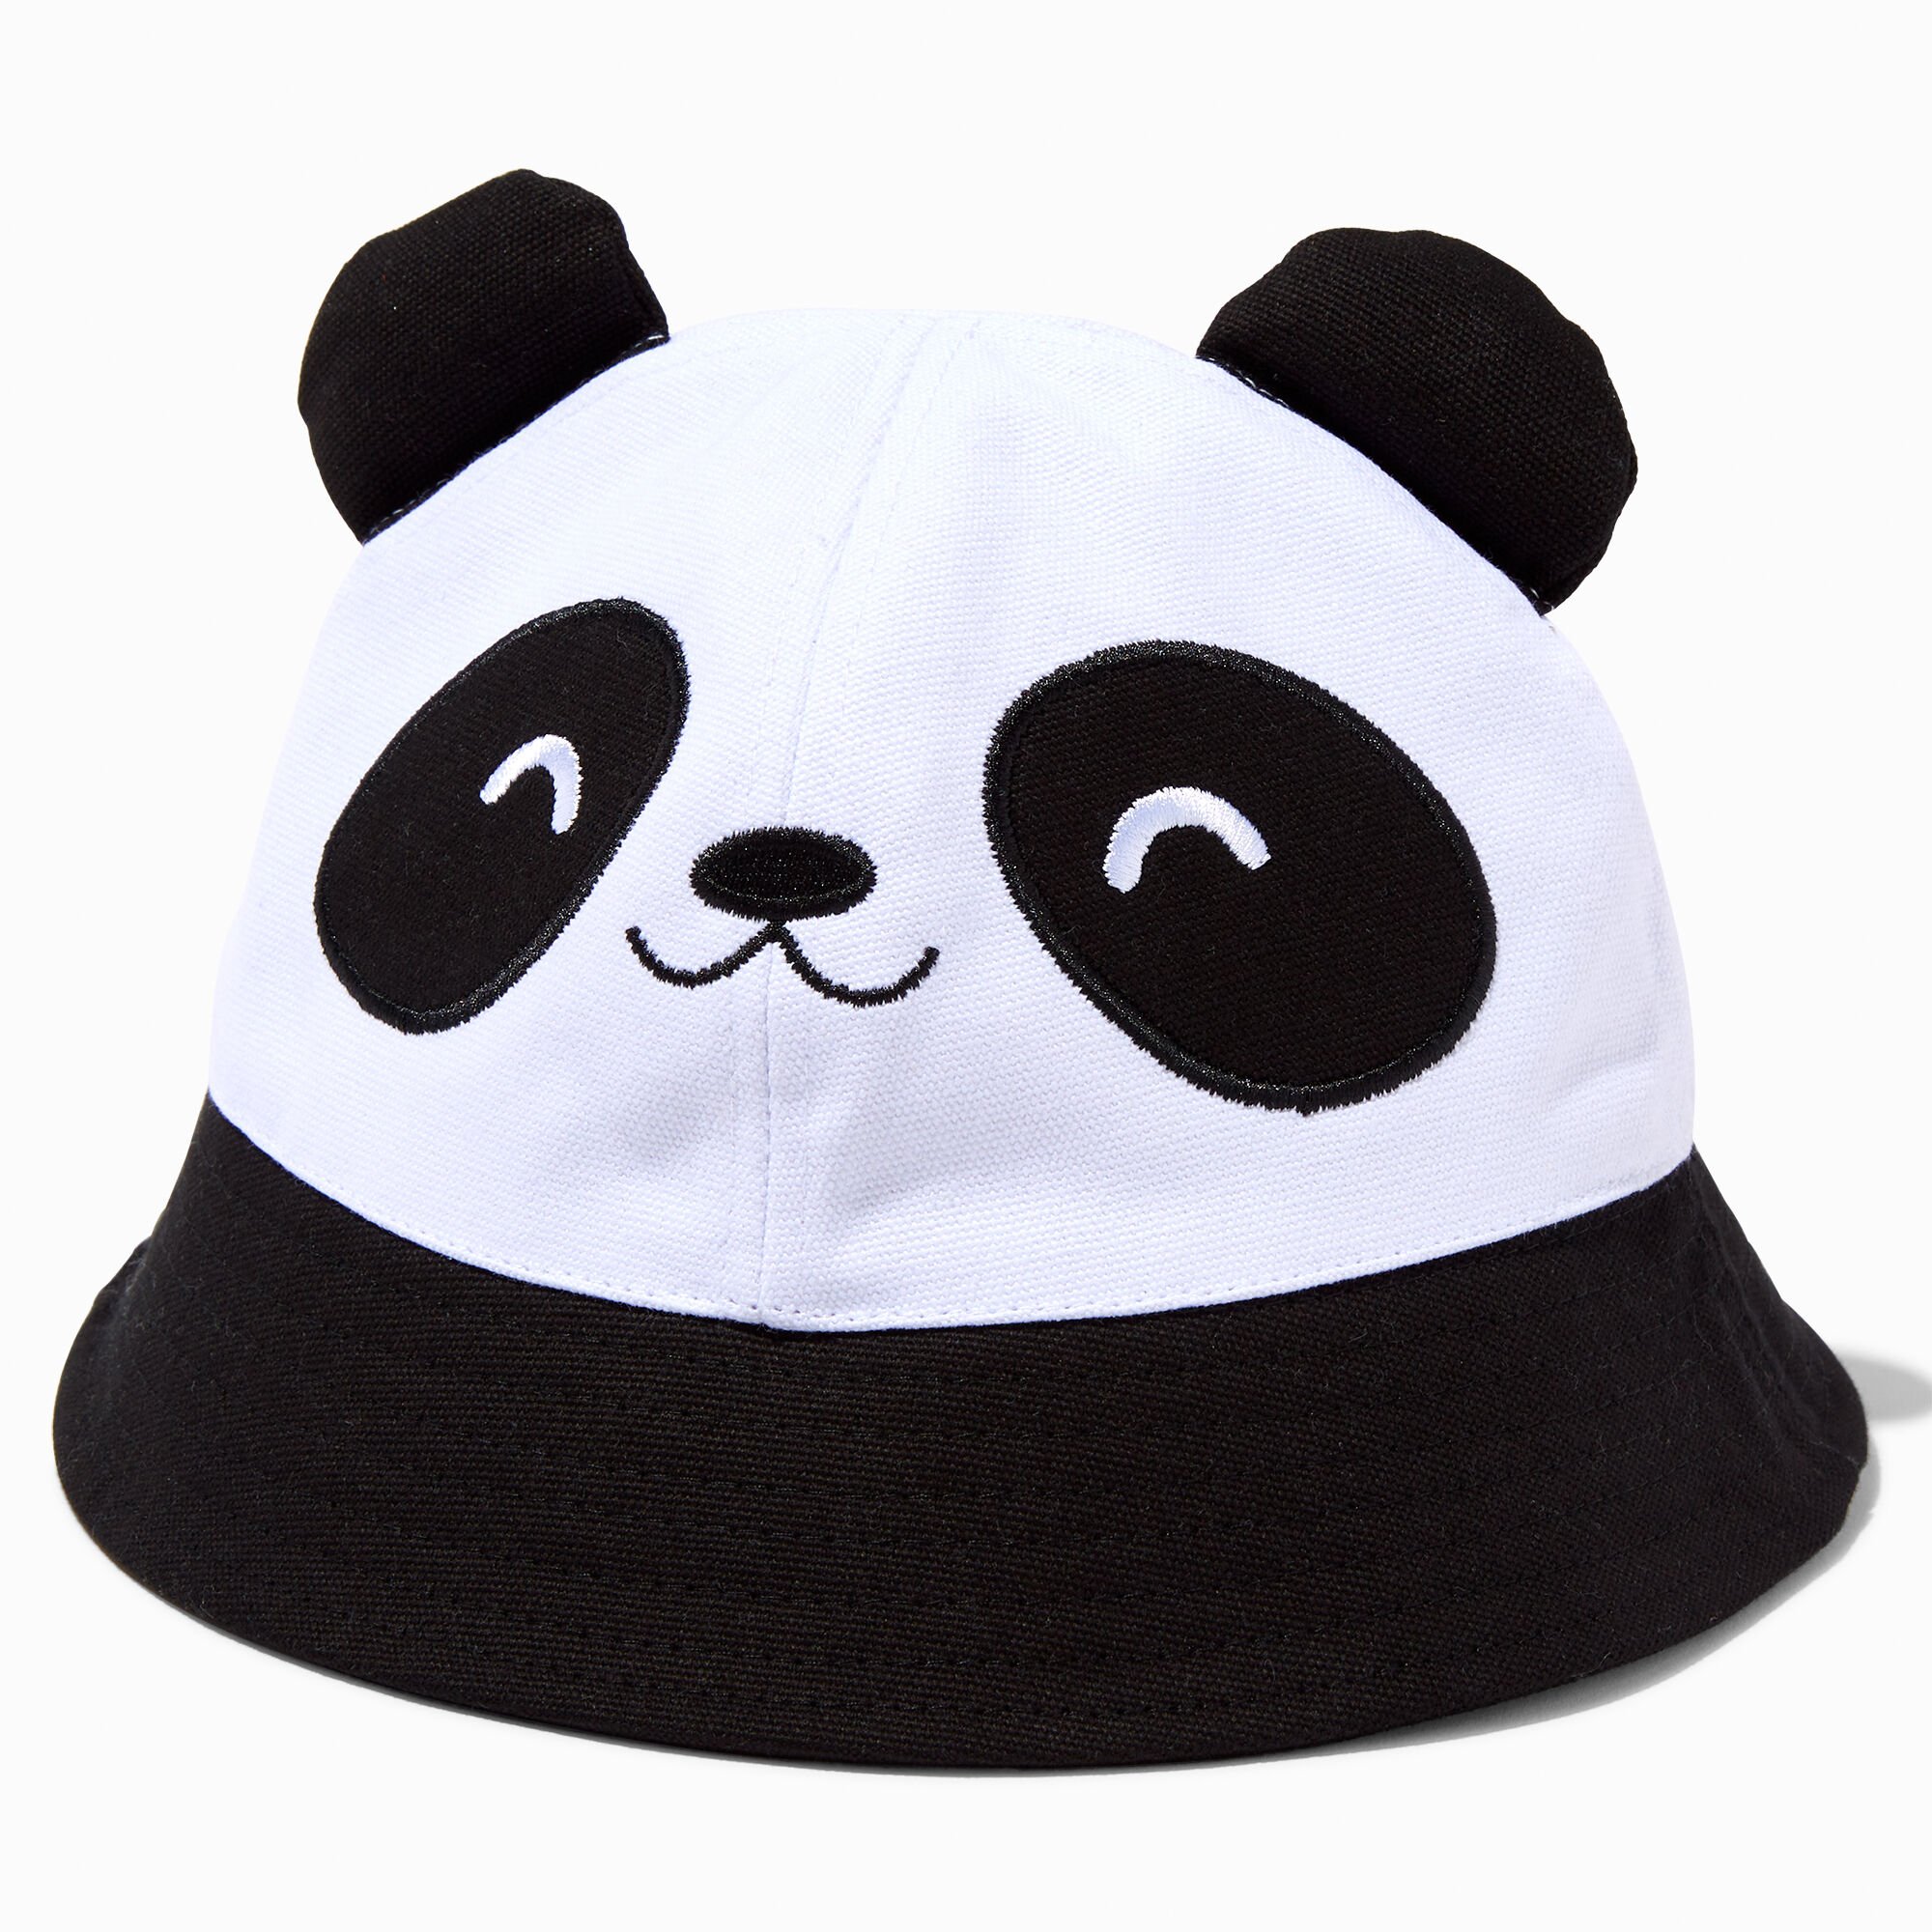 View Claires Panda Bucket Hat information